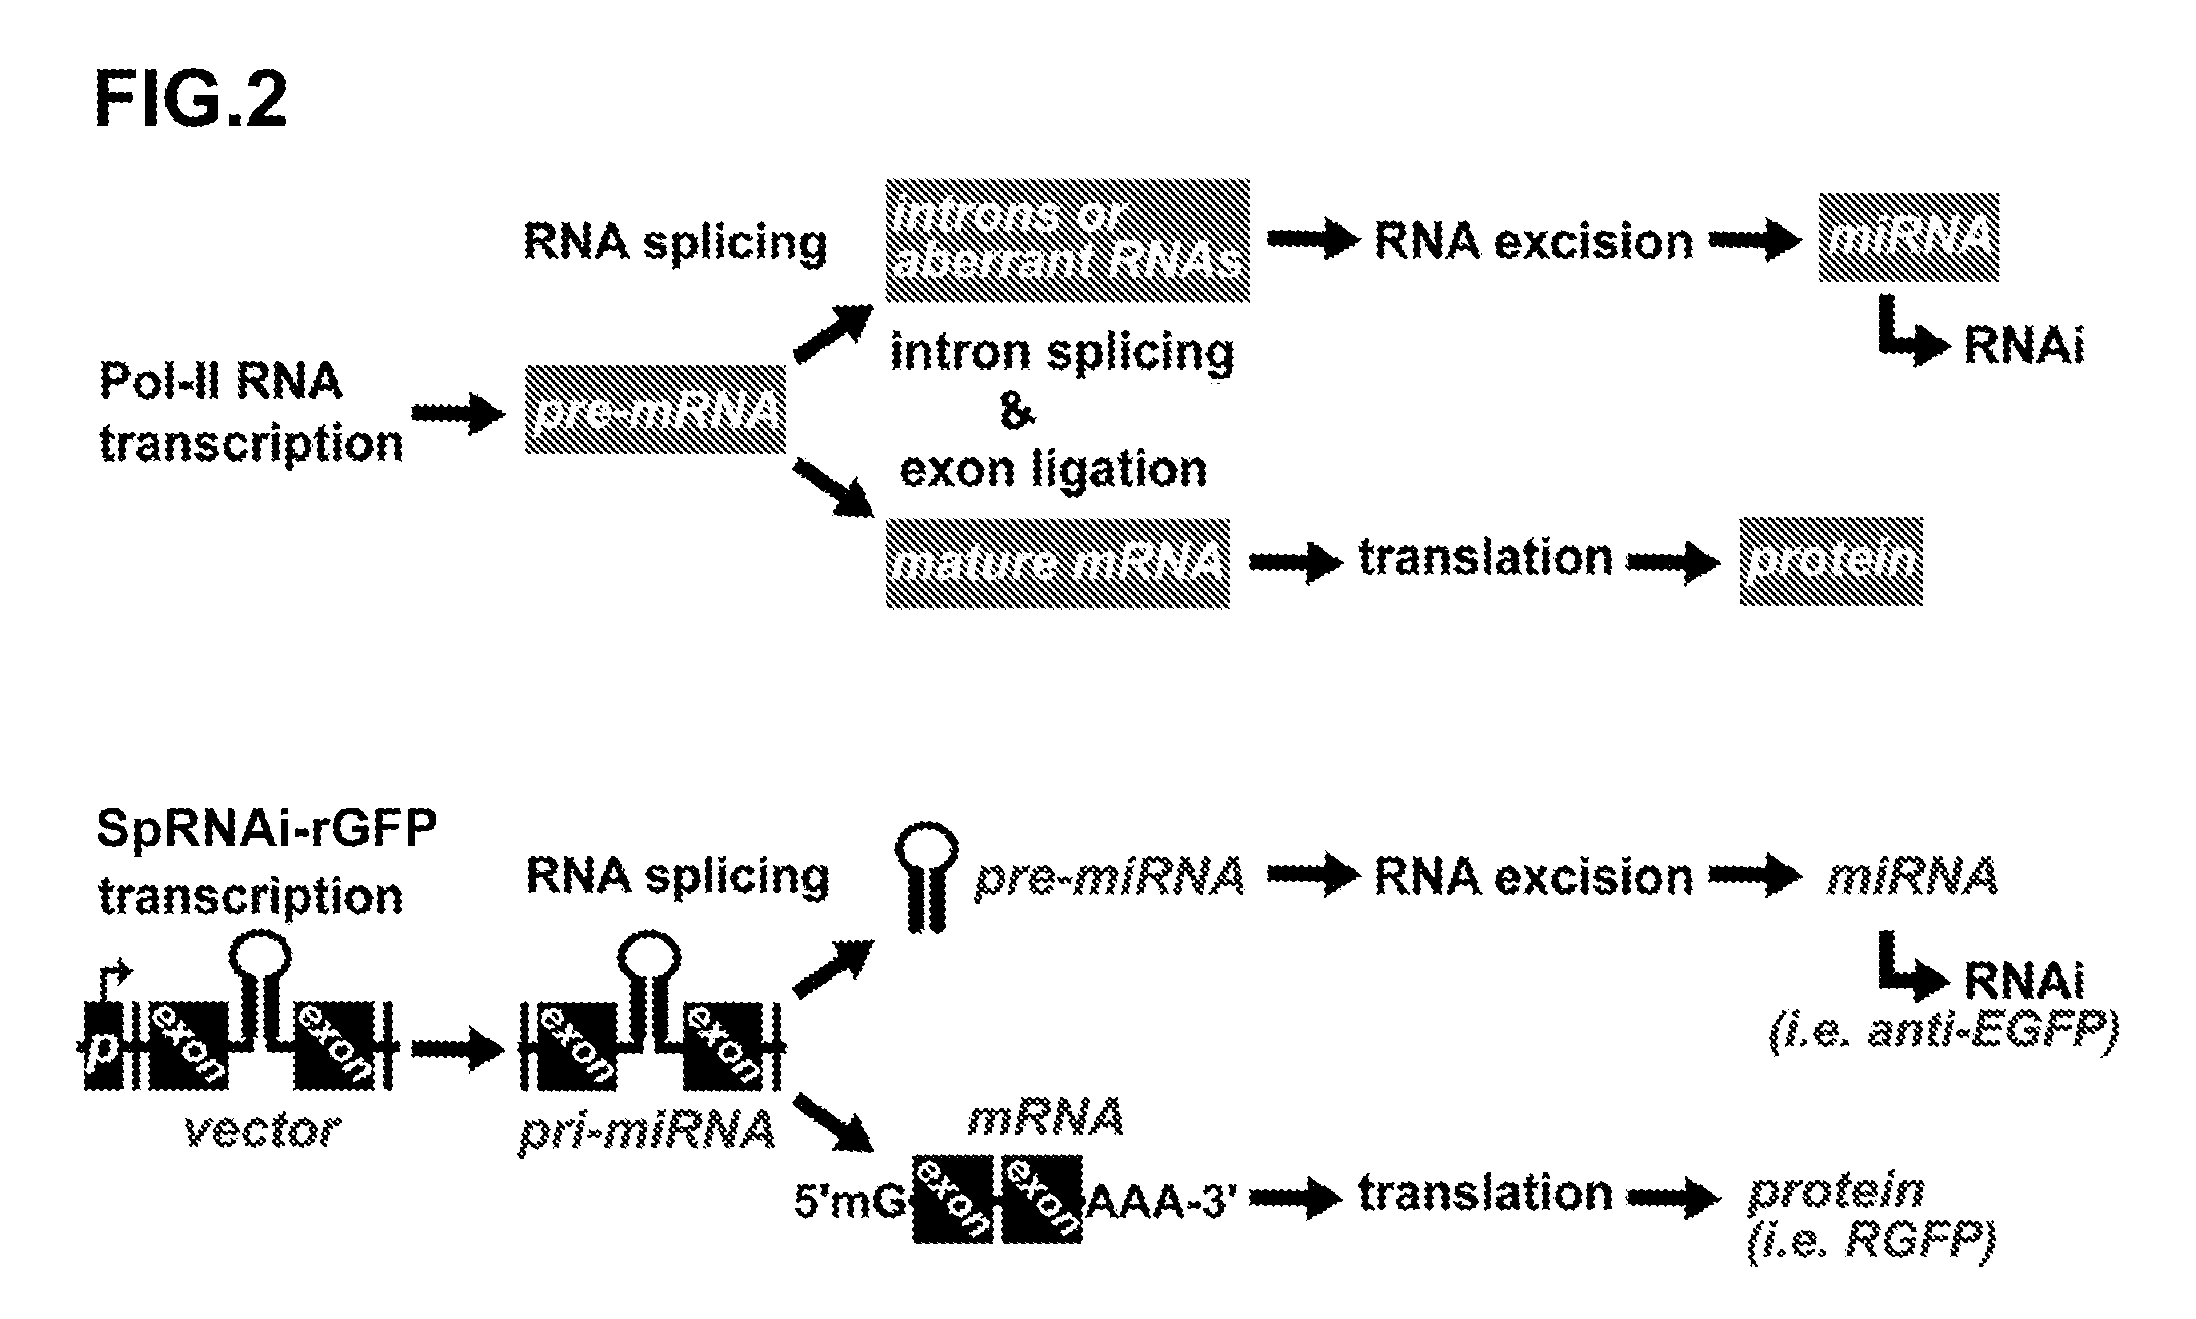 Novel Transgenic Methods Using intronic RNA